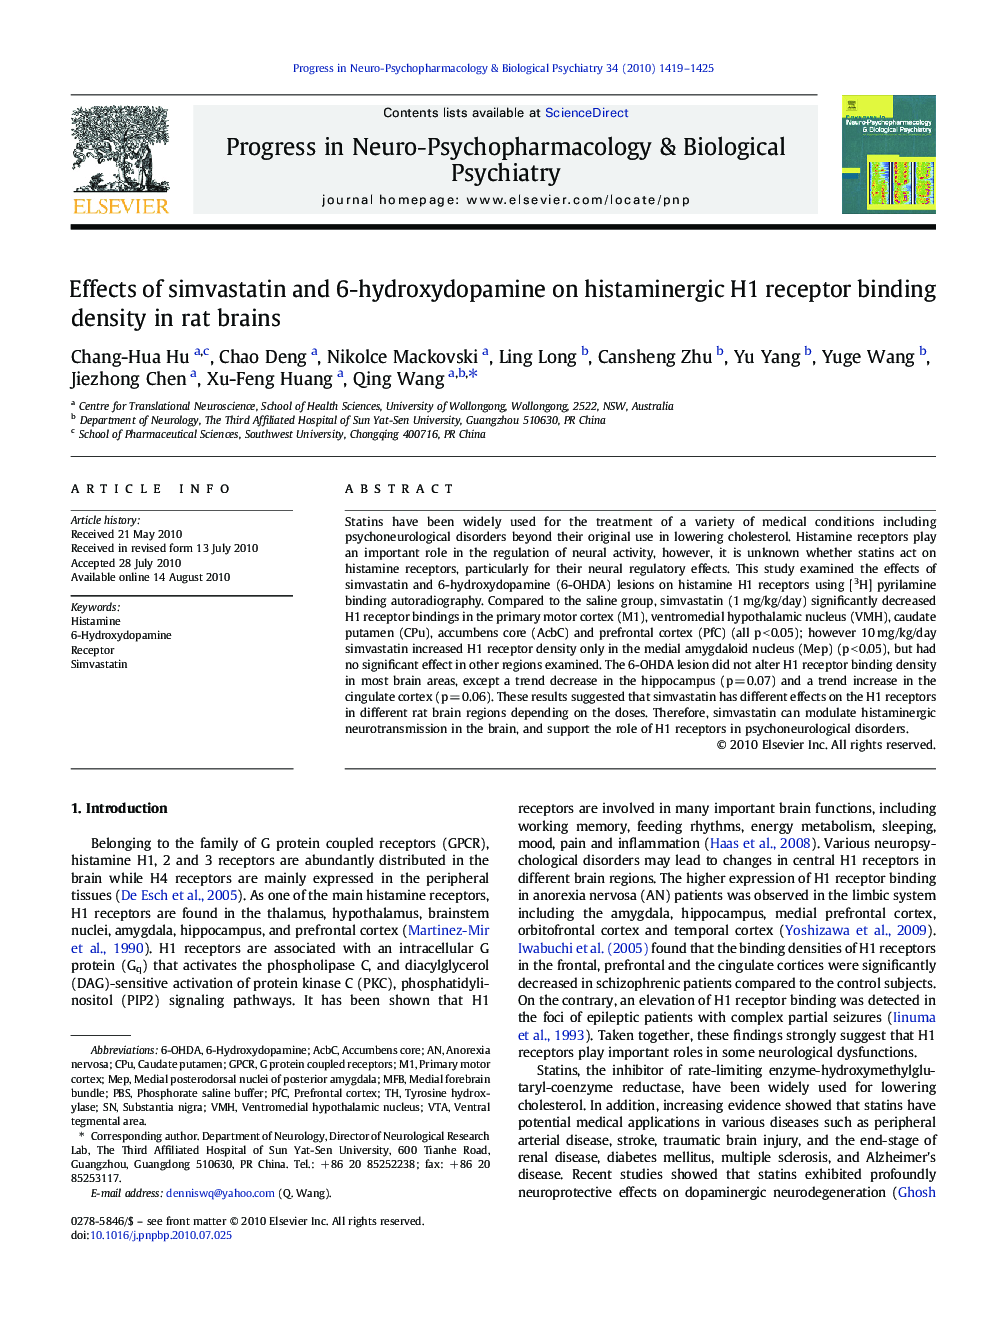 Effects of simvastatin and 6-hydroxydopamine on histaminergic H1 receptor binding density in rat brains